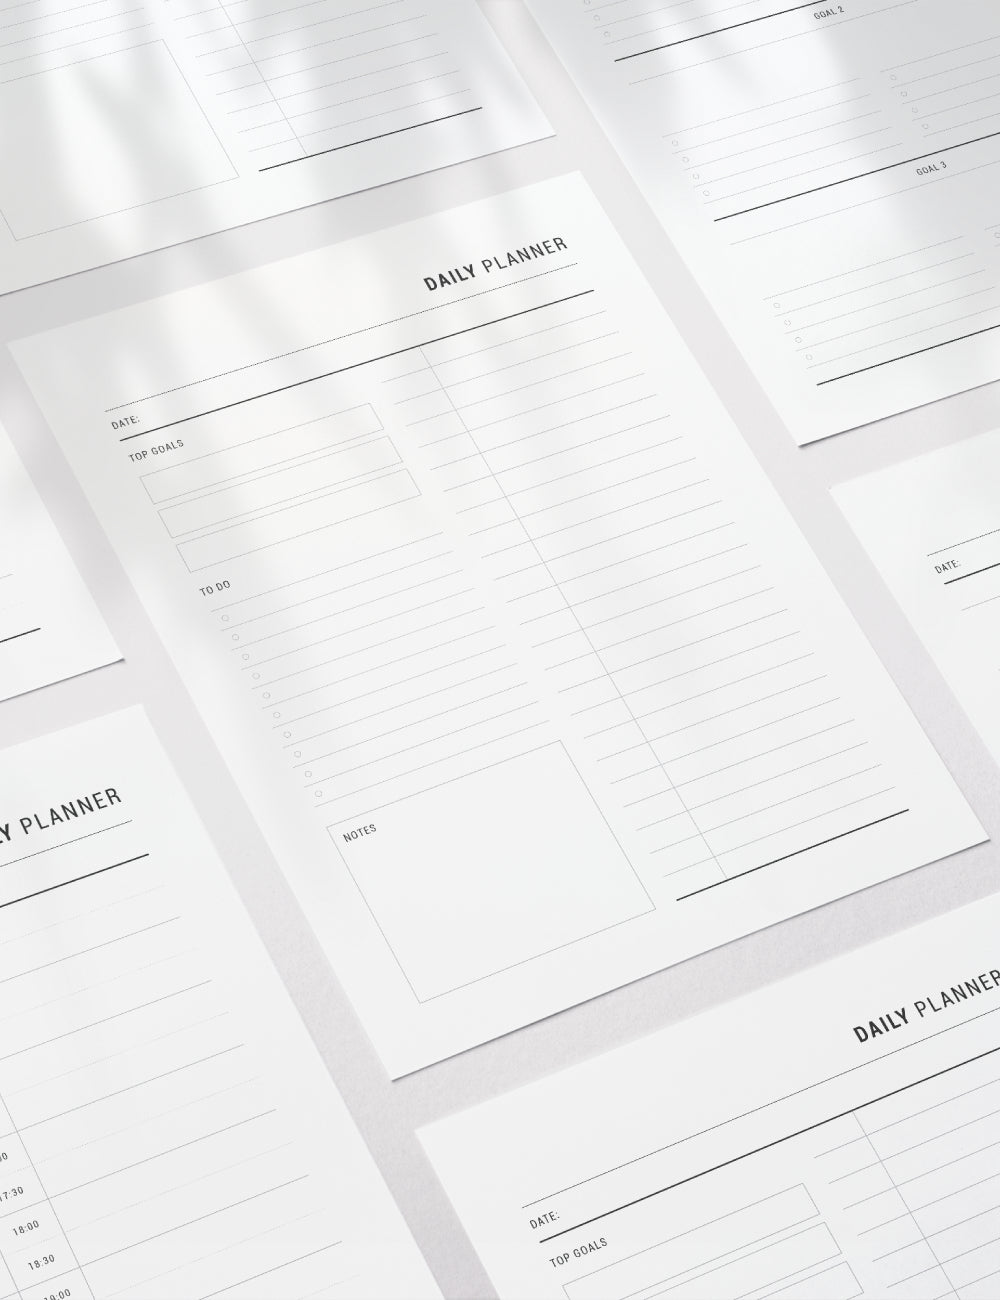 Printable Daily Planner | Undated | Printable Planner Essentials | A4 | A5 | US Letter | Printable Planner Pages | Minimal Aesthetic | Clean Design | PDF + JPEG | PAPER MOON Art & Design